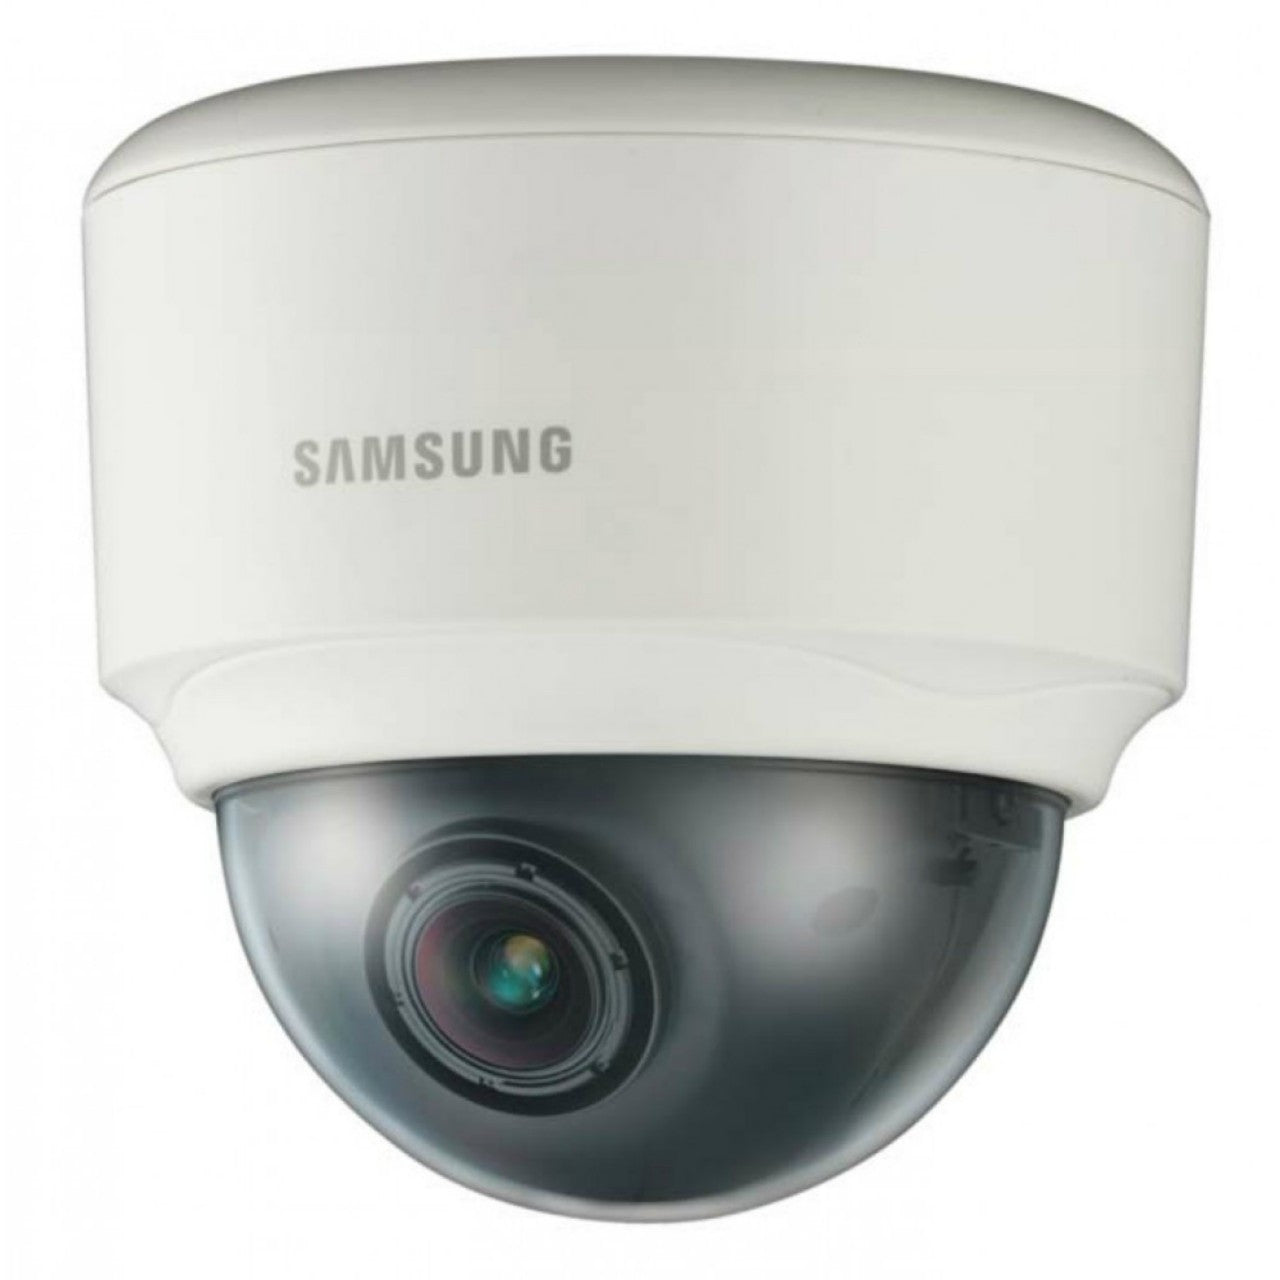 Samsung SND-5080 1.3 Megapixel HD Network Dome Camera